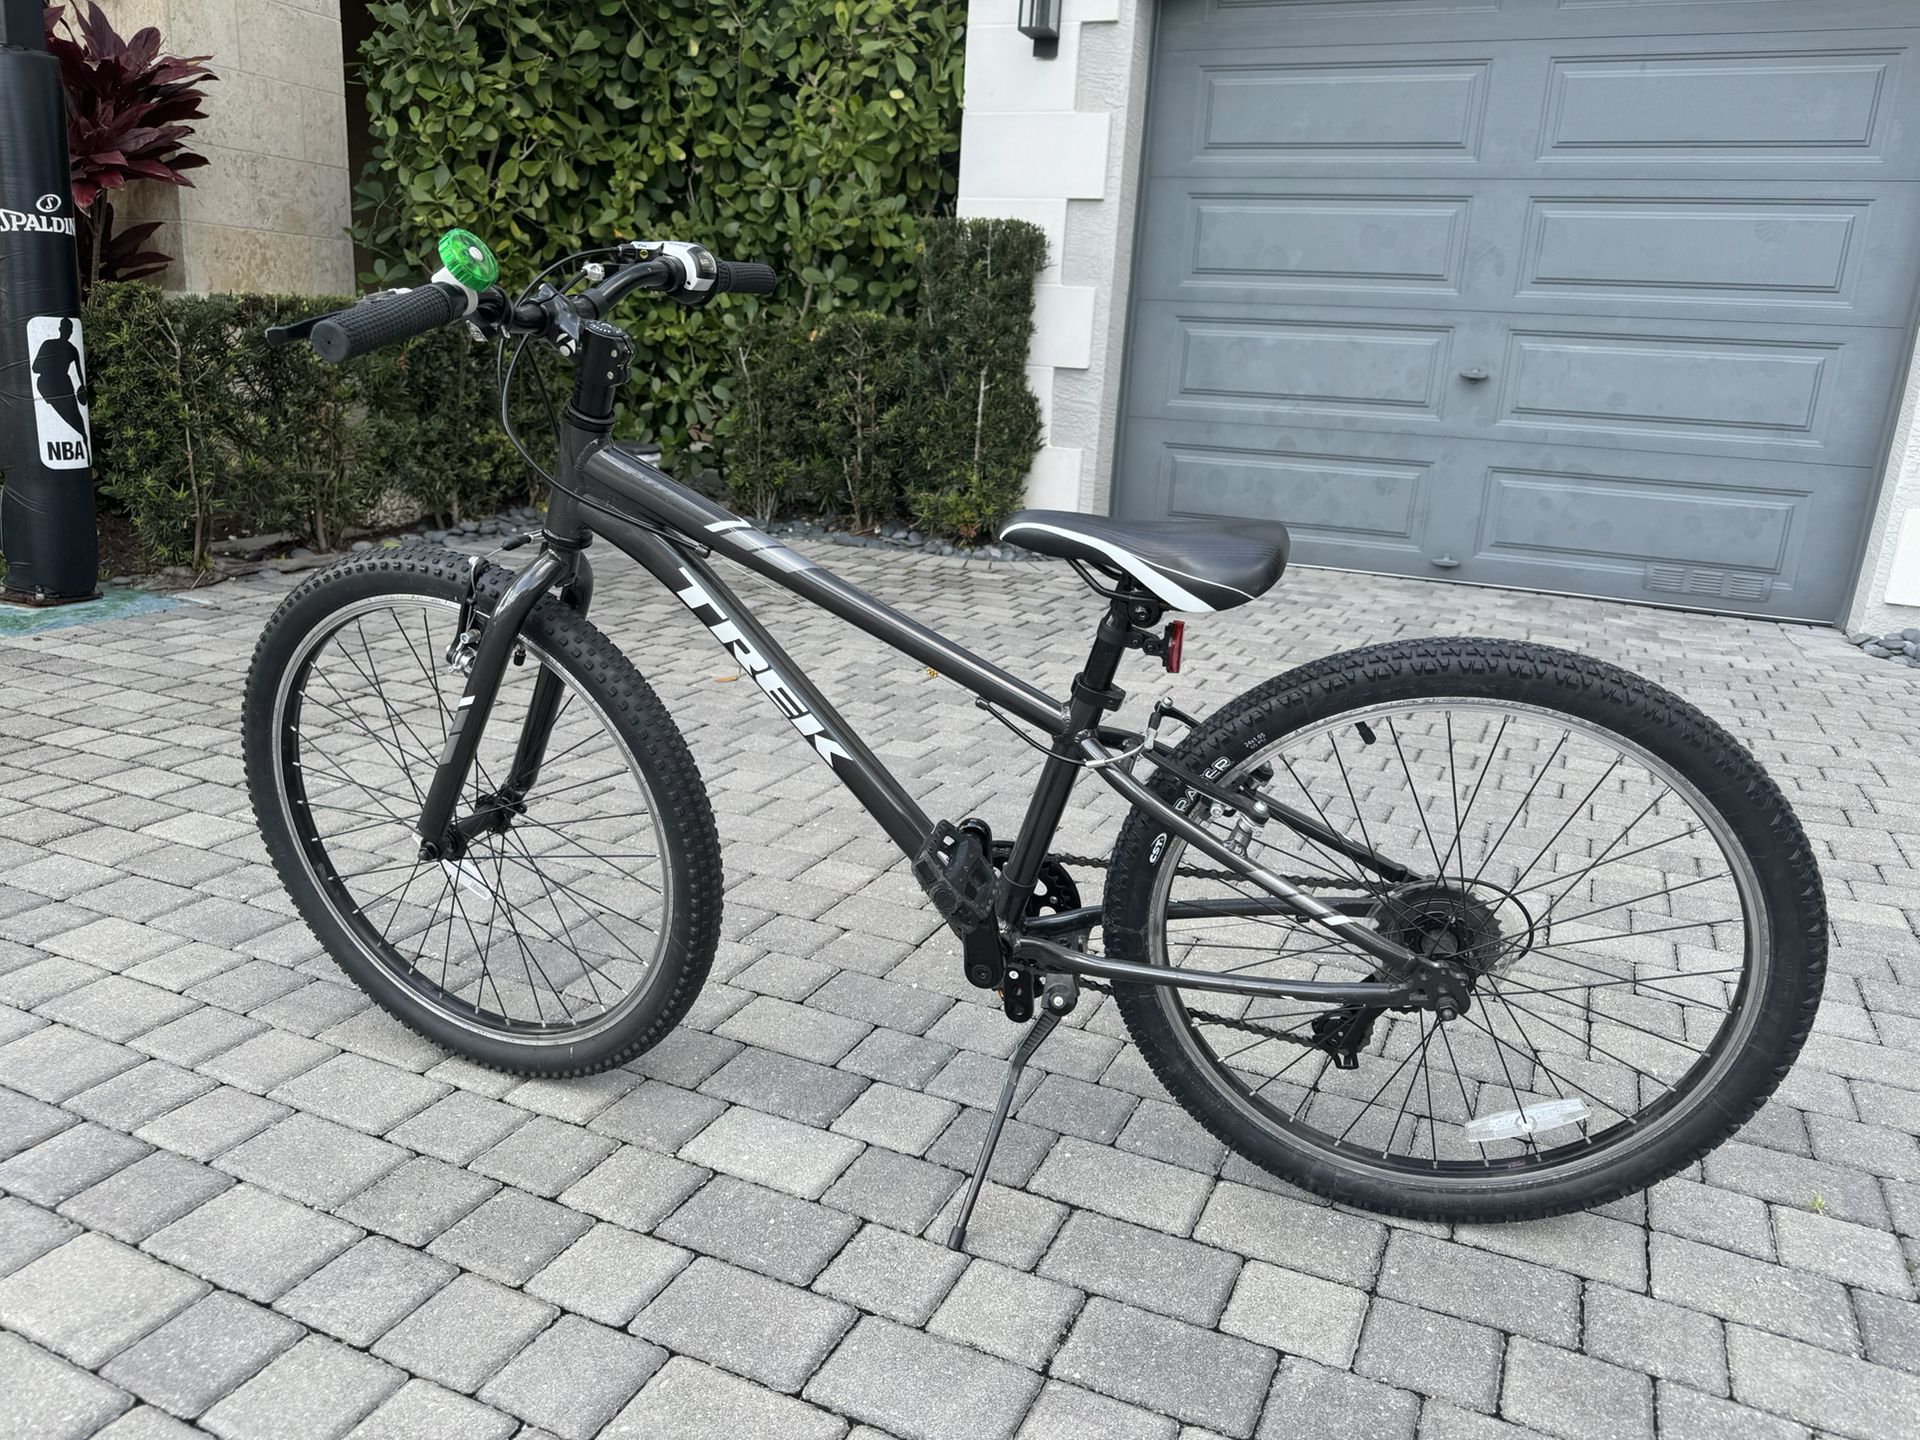  Trek mountain bike… 24” youth bike  List price $250